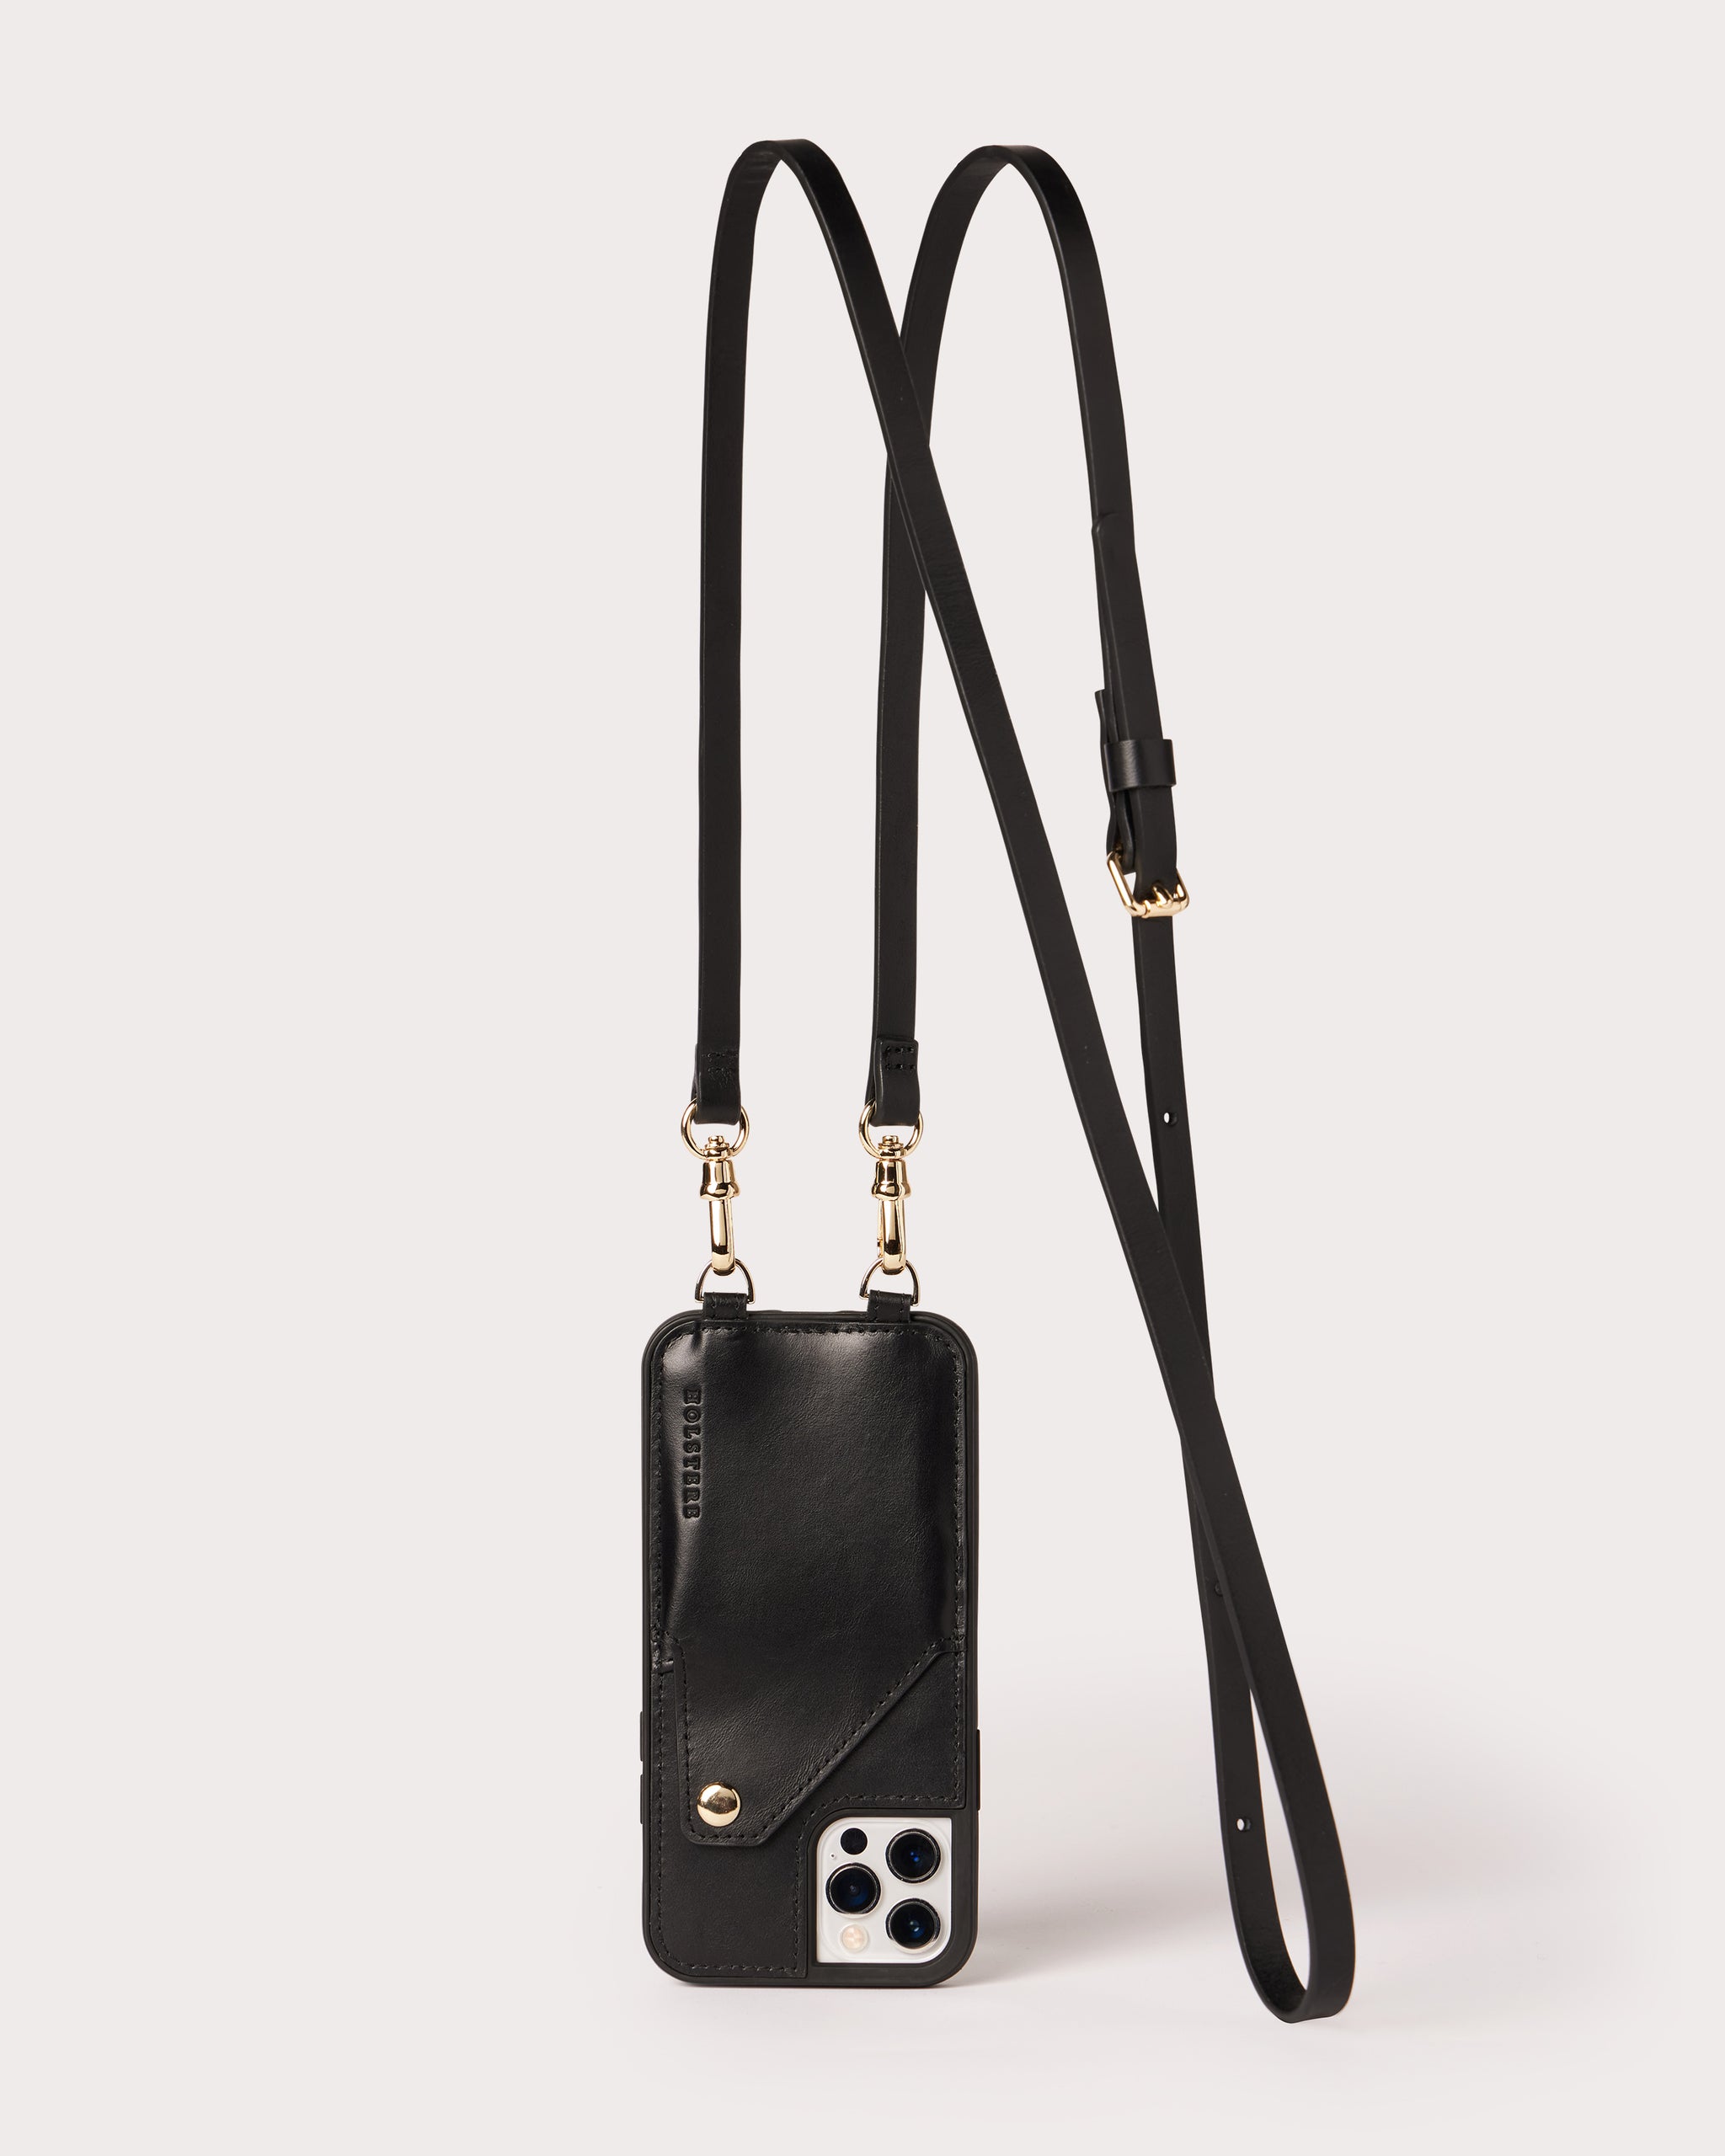 Holstere Genuine Leather Crossbody Chain Chanel-Like Crossbody Strap